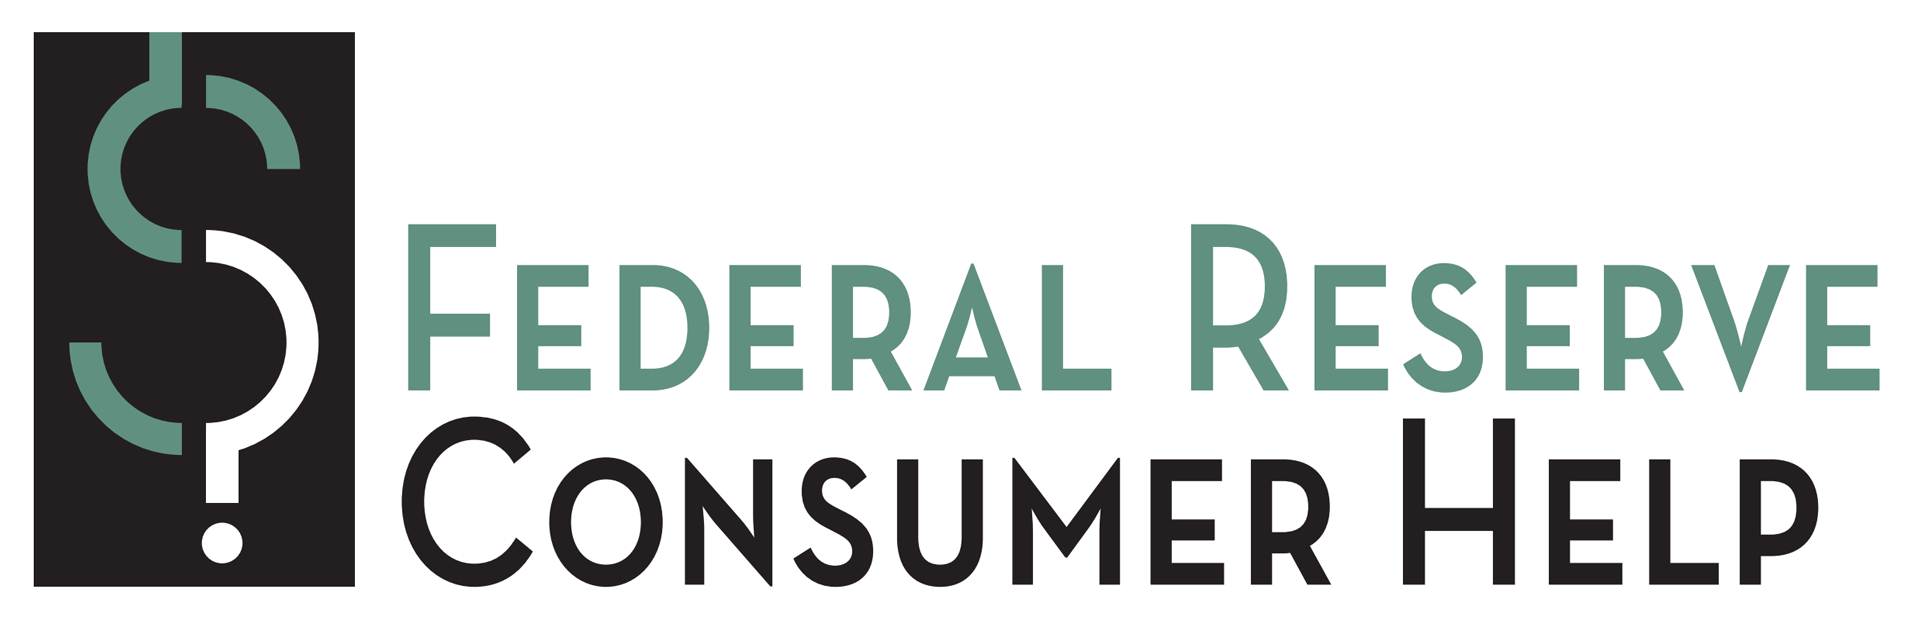 Federal Reserve Consumer Help logo